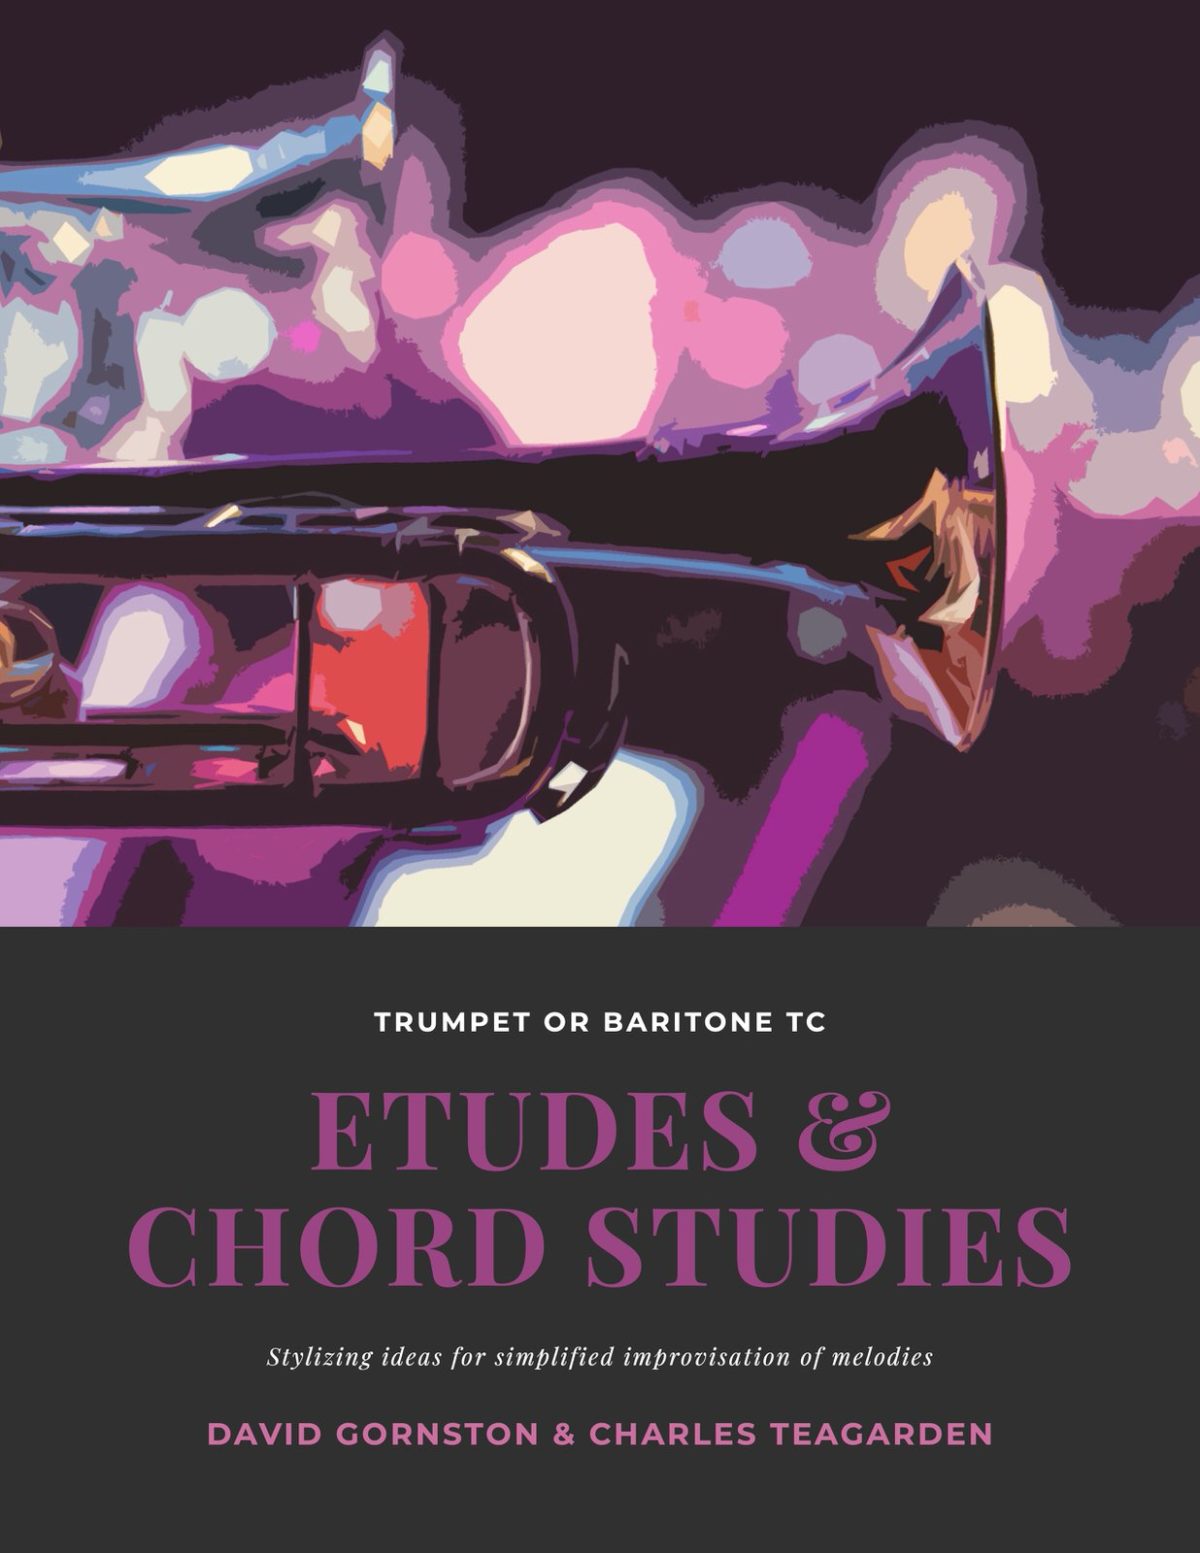 Etudes & Chord Studies for Trumpet